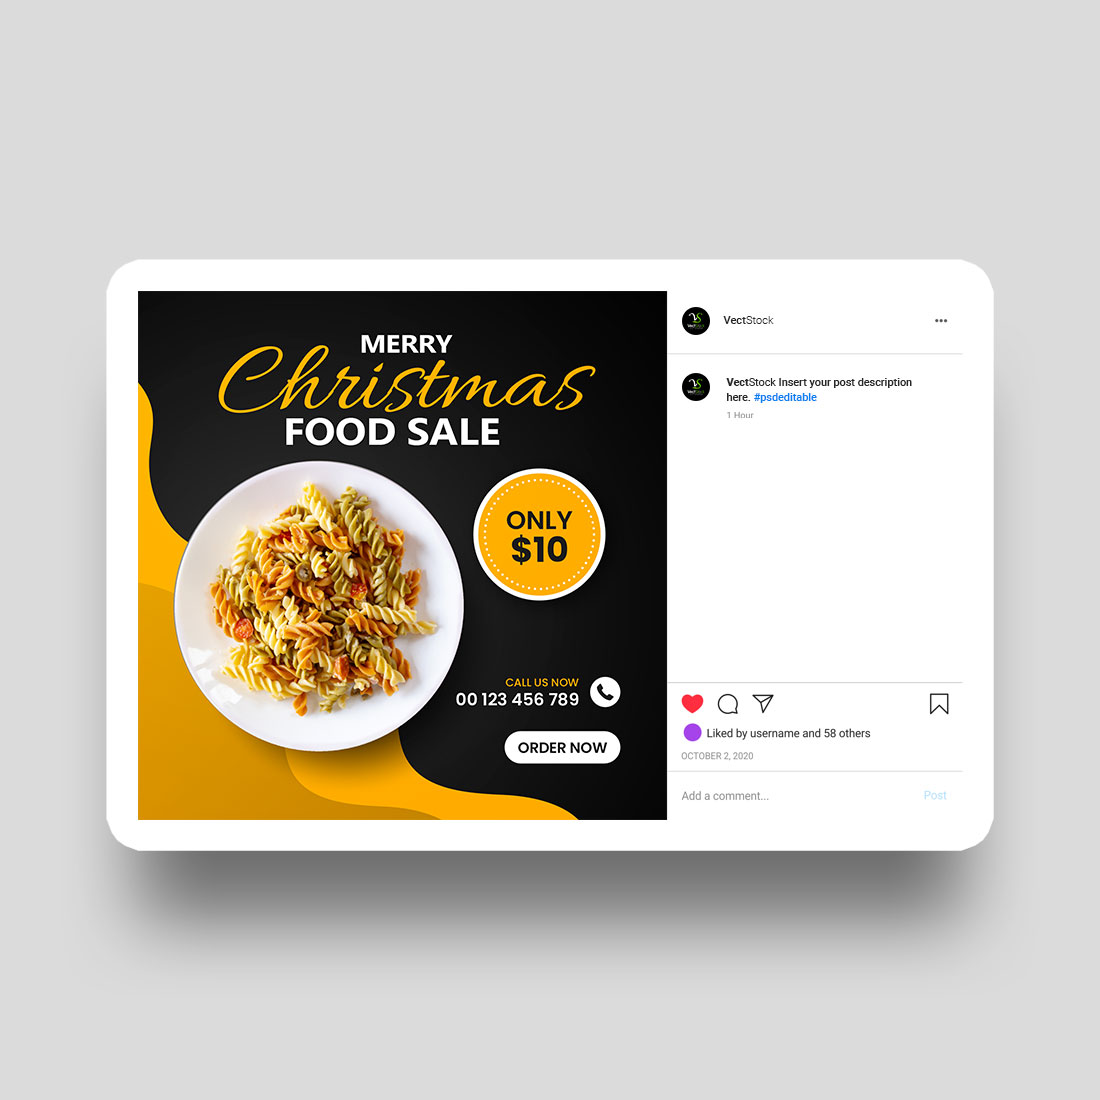 Christmas food sale social media Instagram post template cover image.